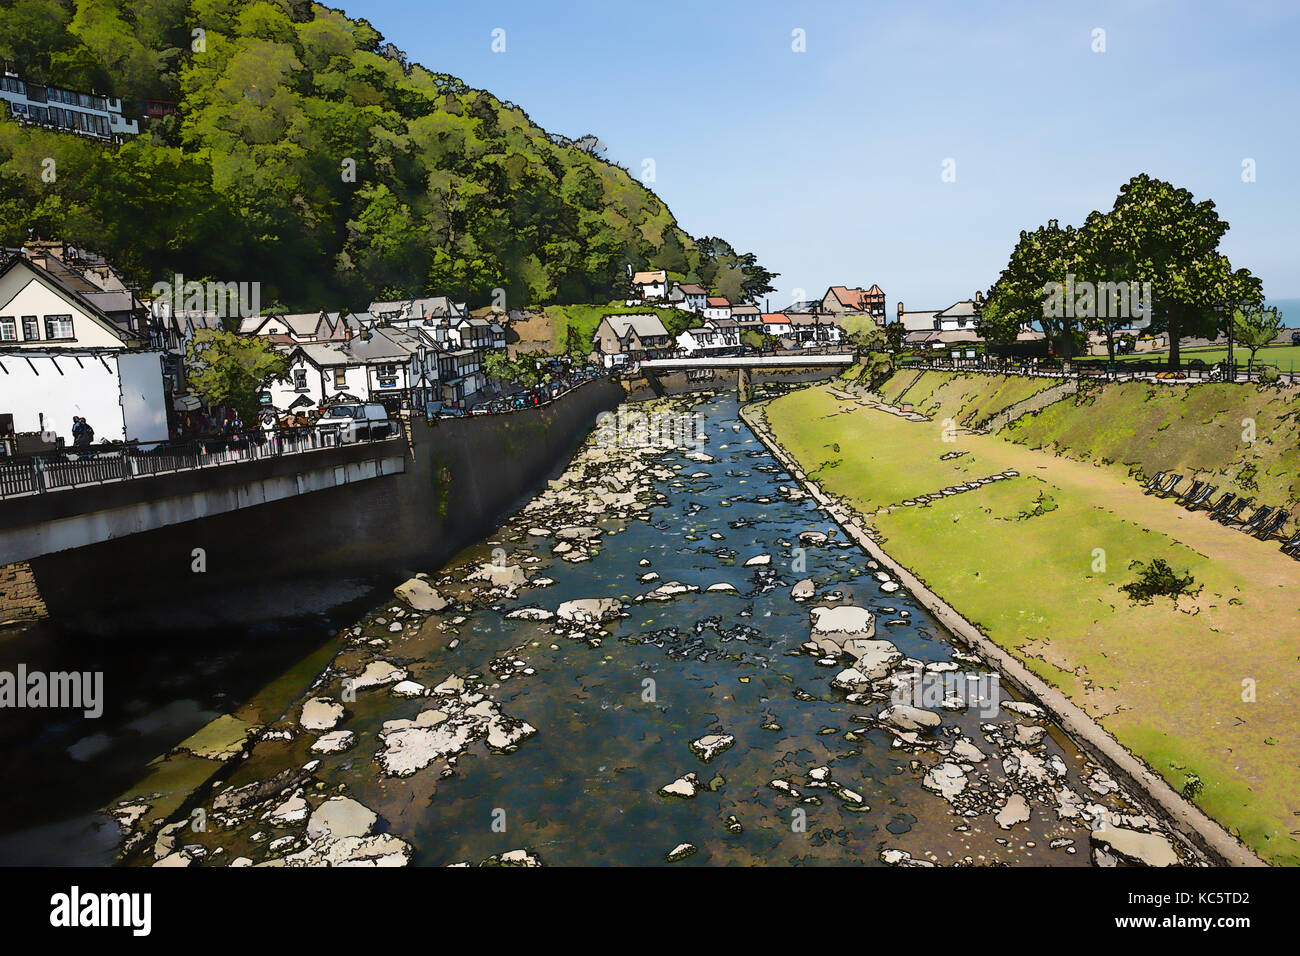 Lynmouth Devon England UK river running through the town beautiful spring sunshine digital illustration Stock Photo